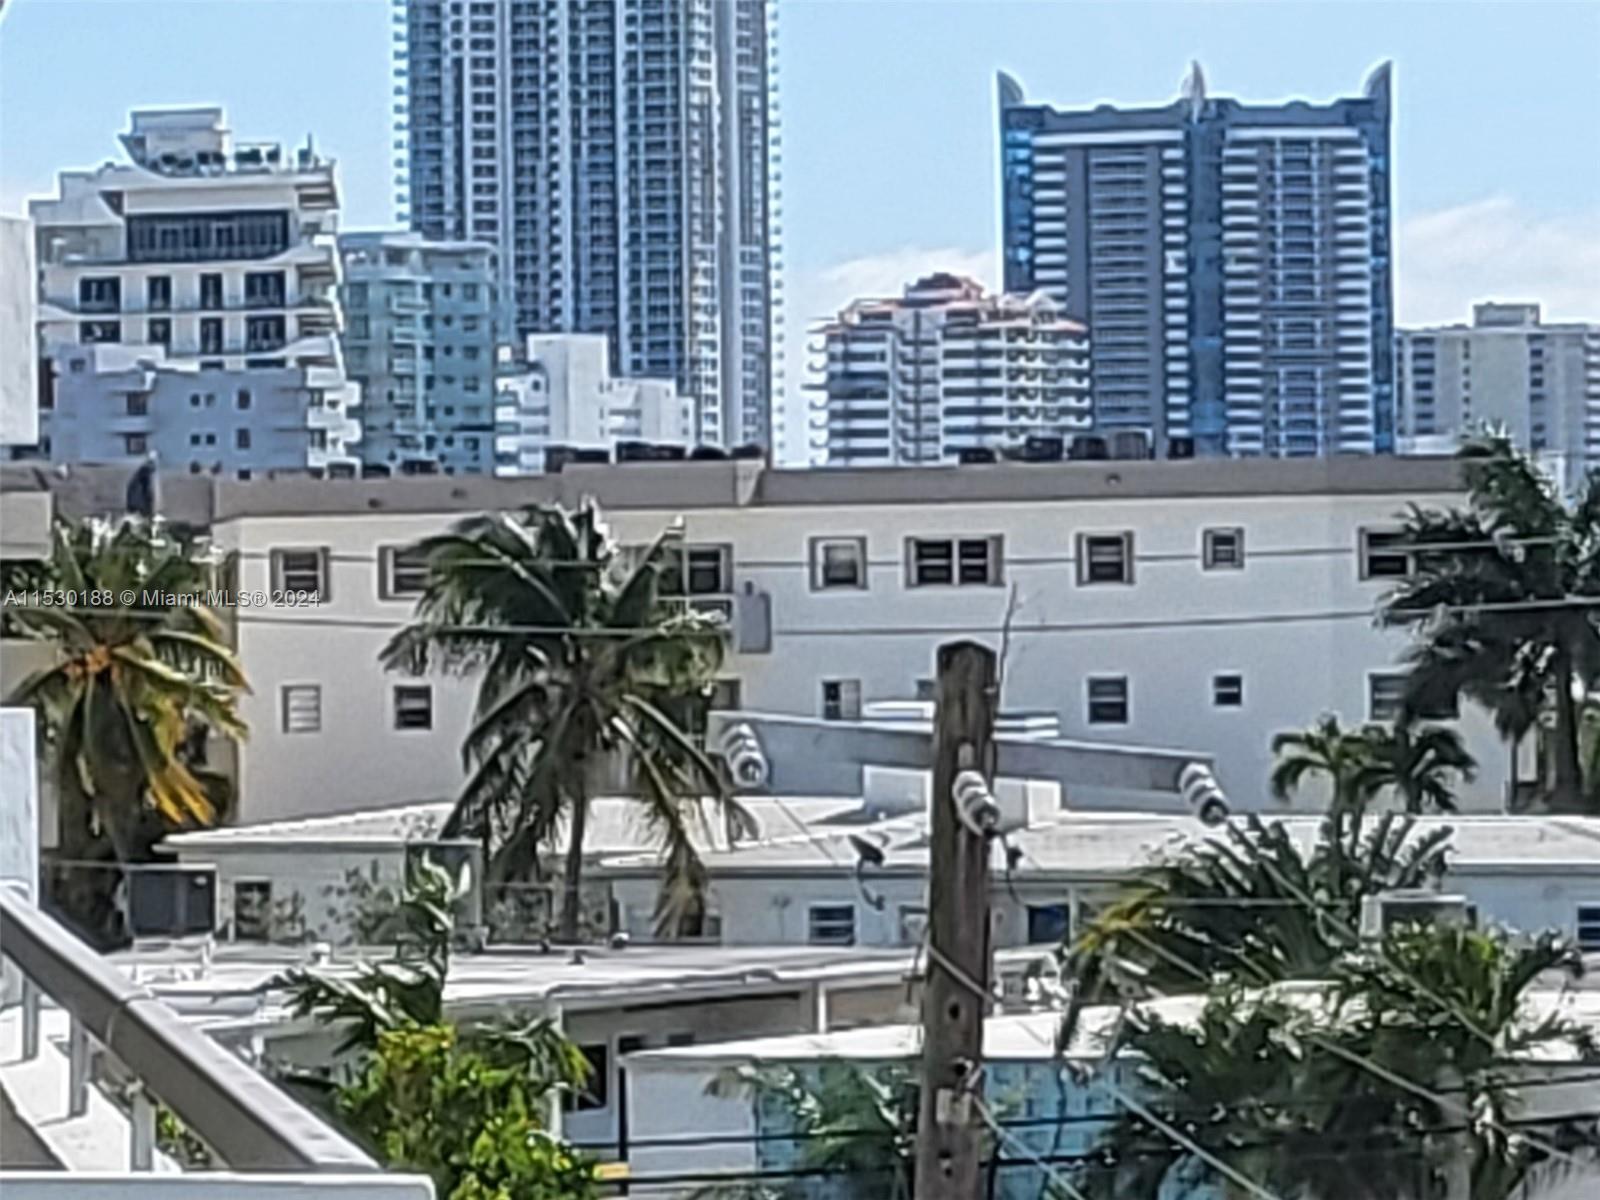 Photo of 7300 Wayne Ave #416 in Miami Beach, FL